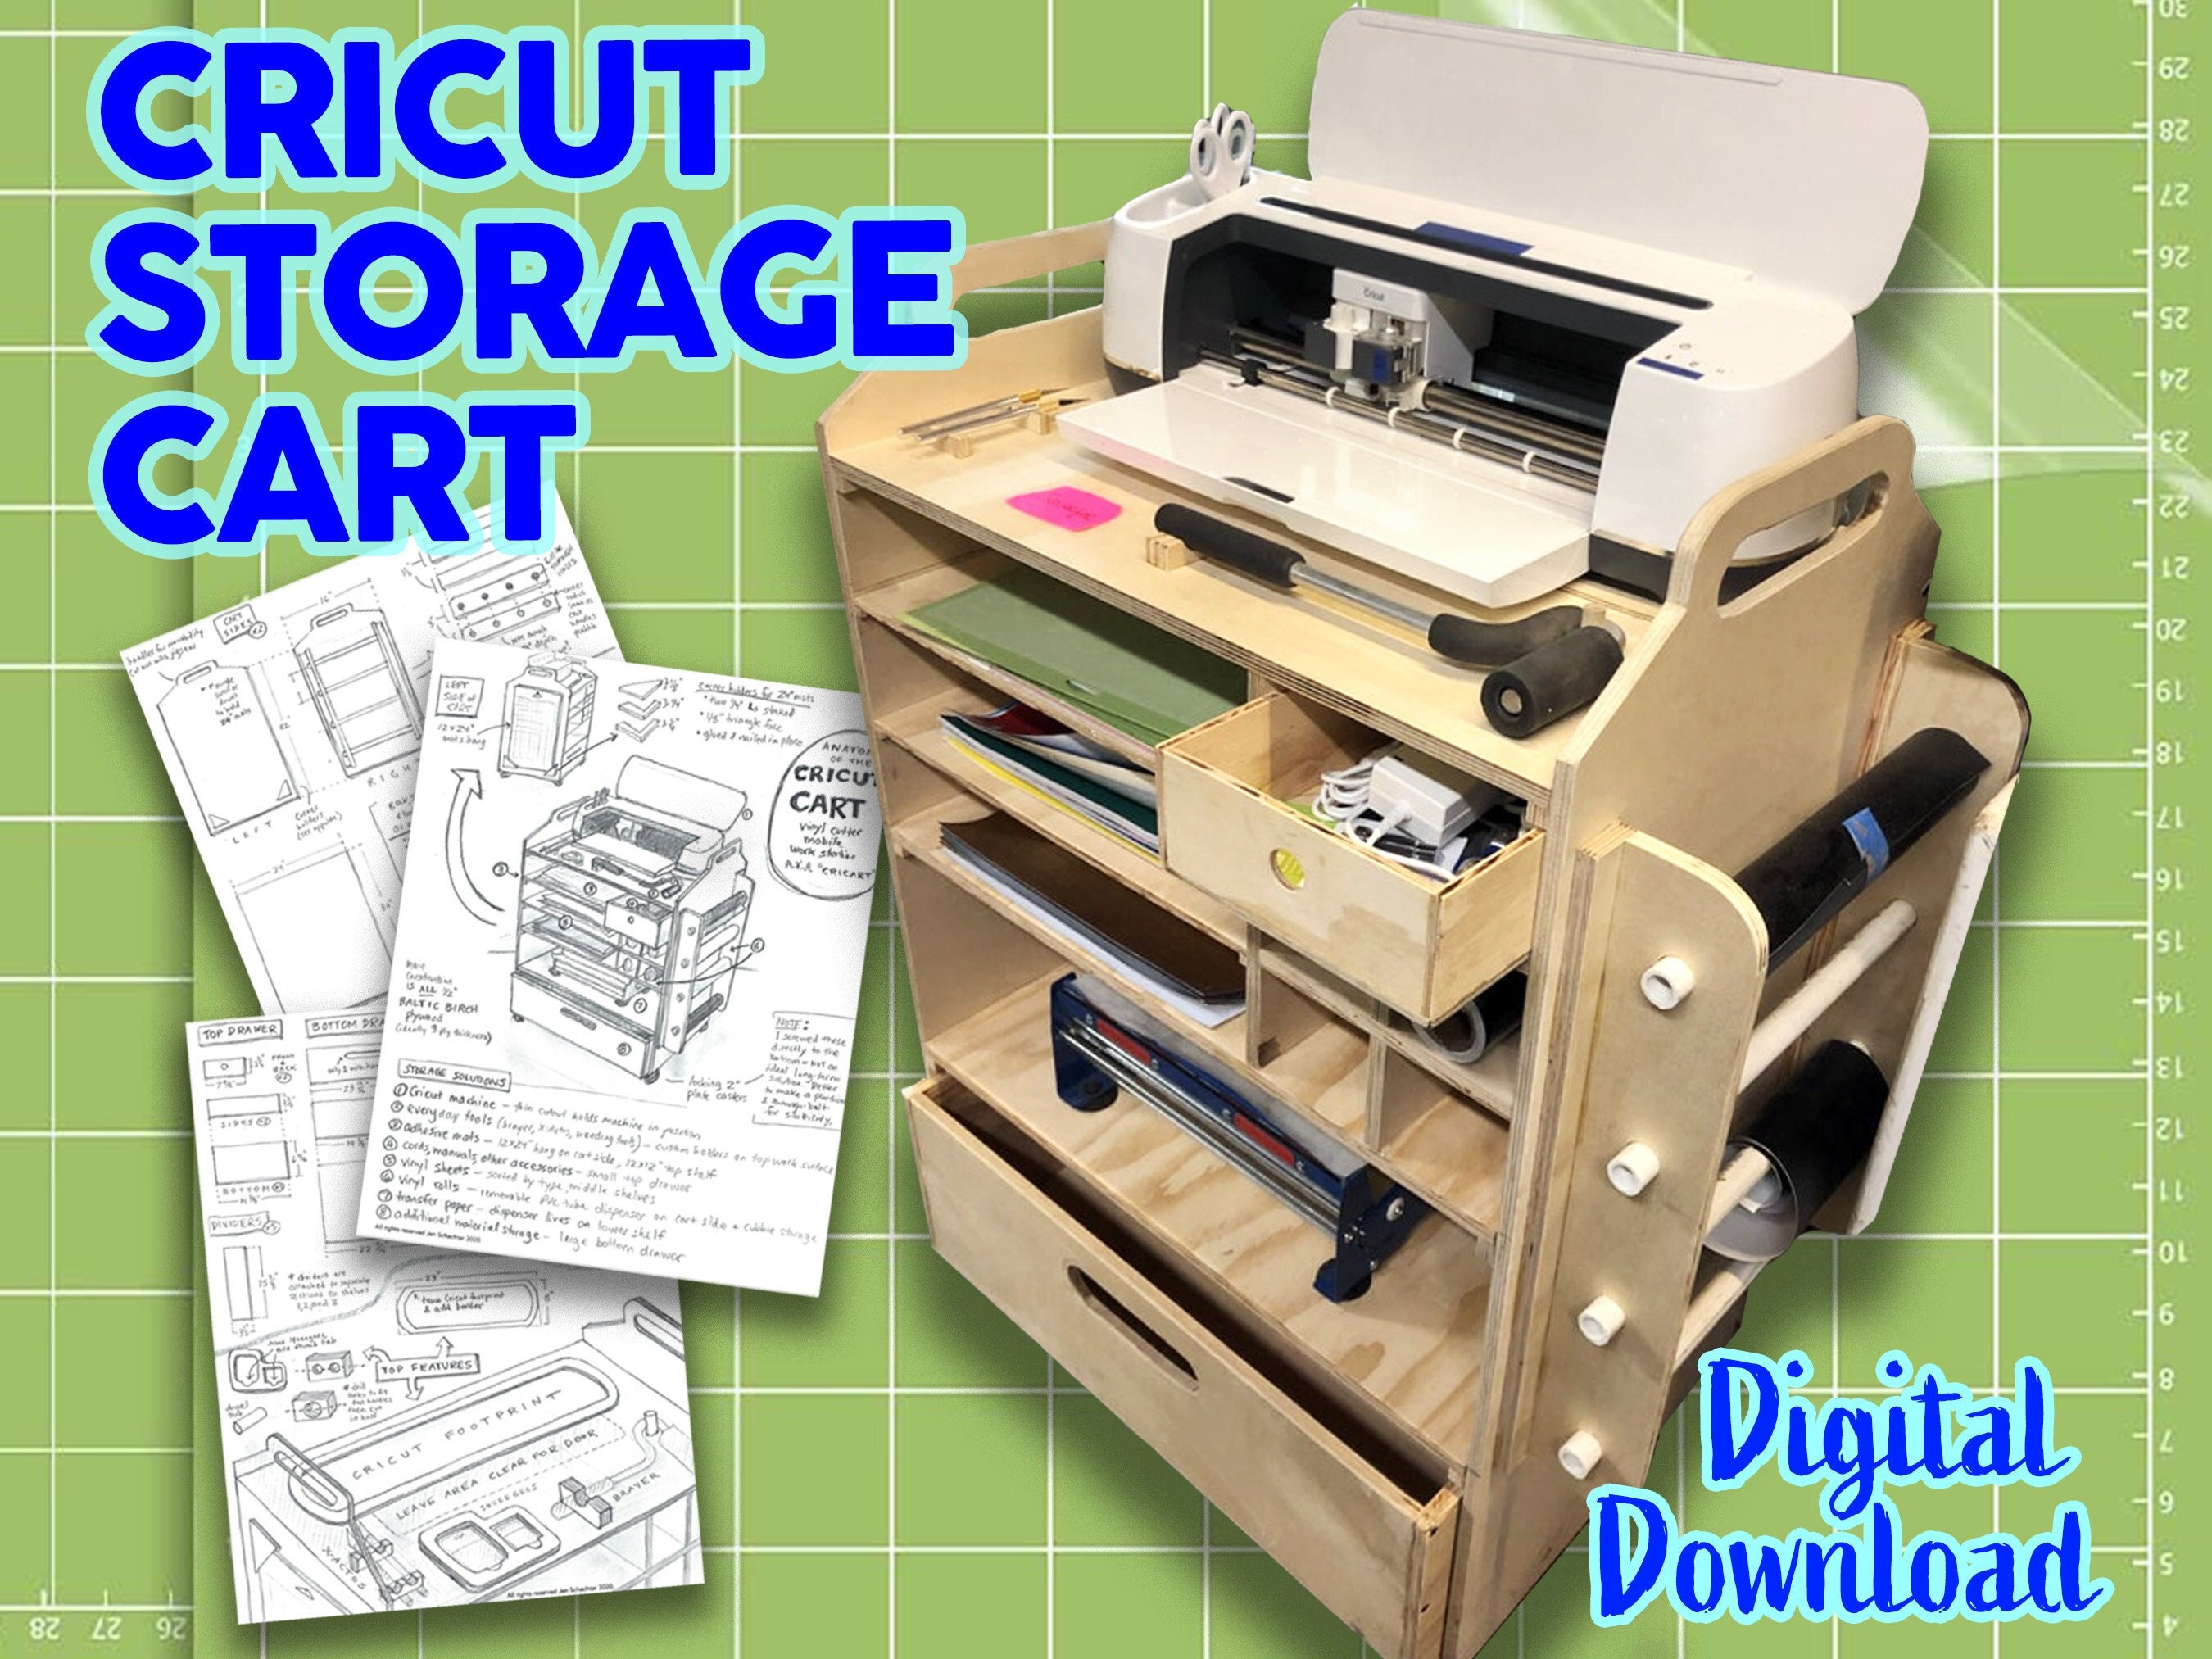 Cricut Storage Cart Plans Digital Download 